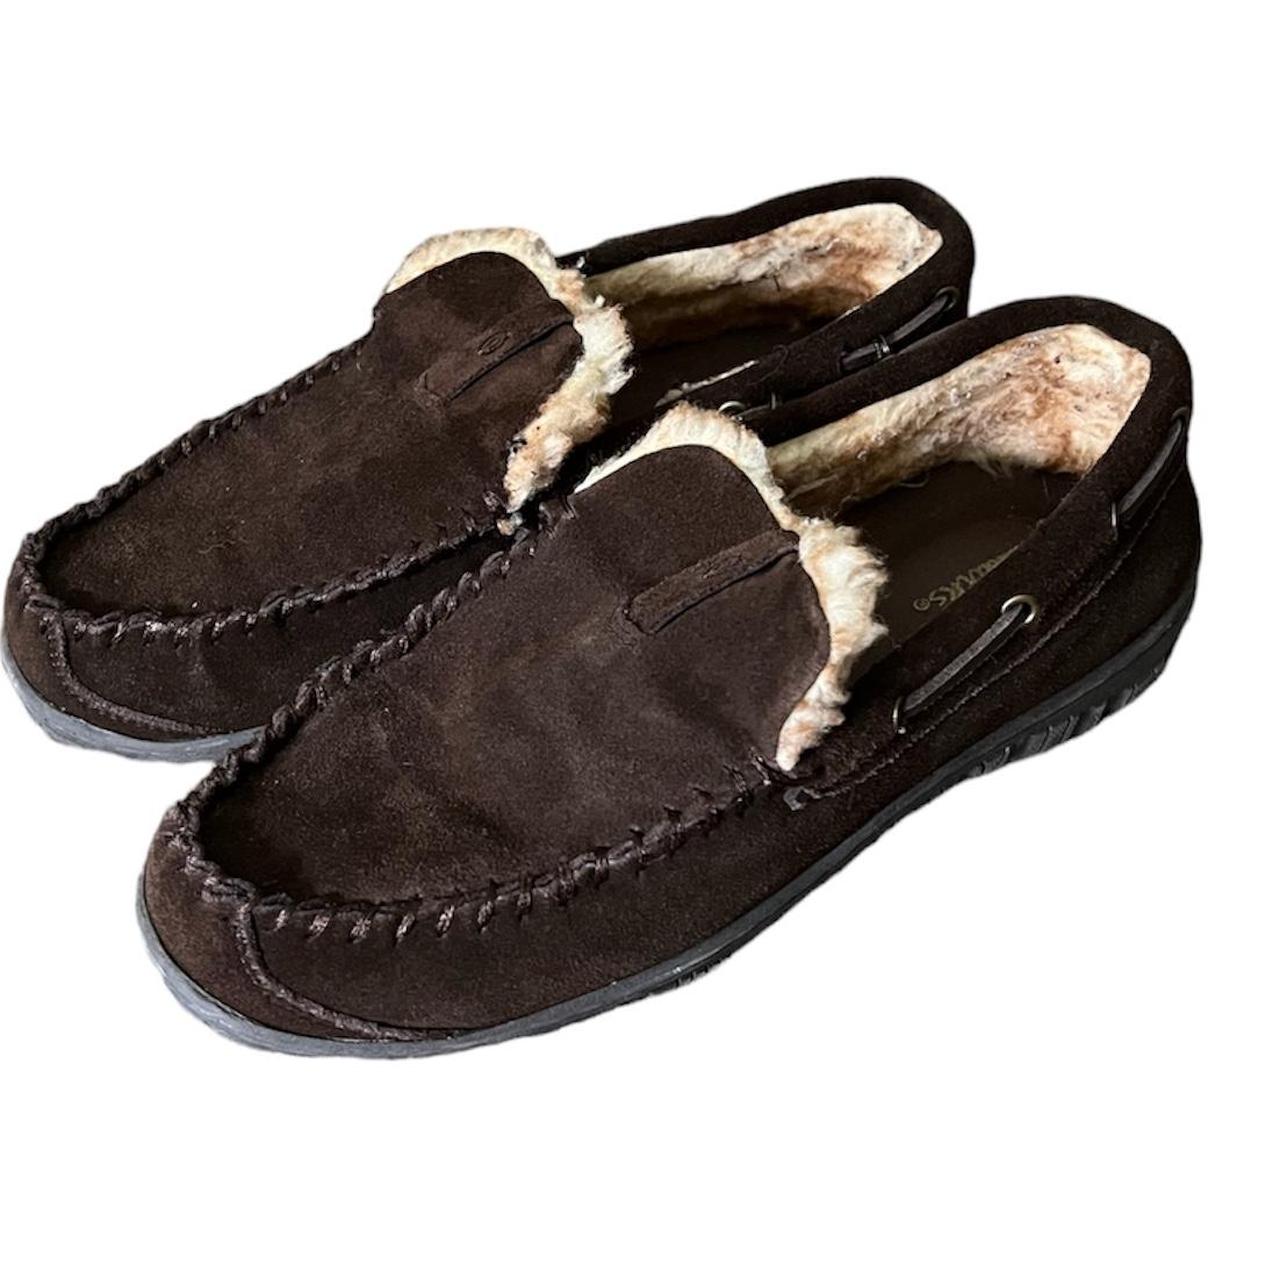 Clarks Warren Leather Moccasin Clog Slippers Comfort... - Depop